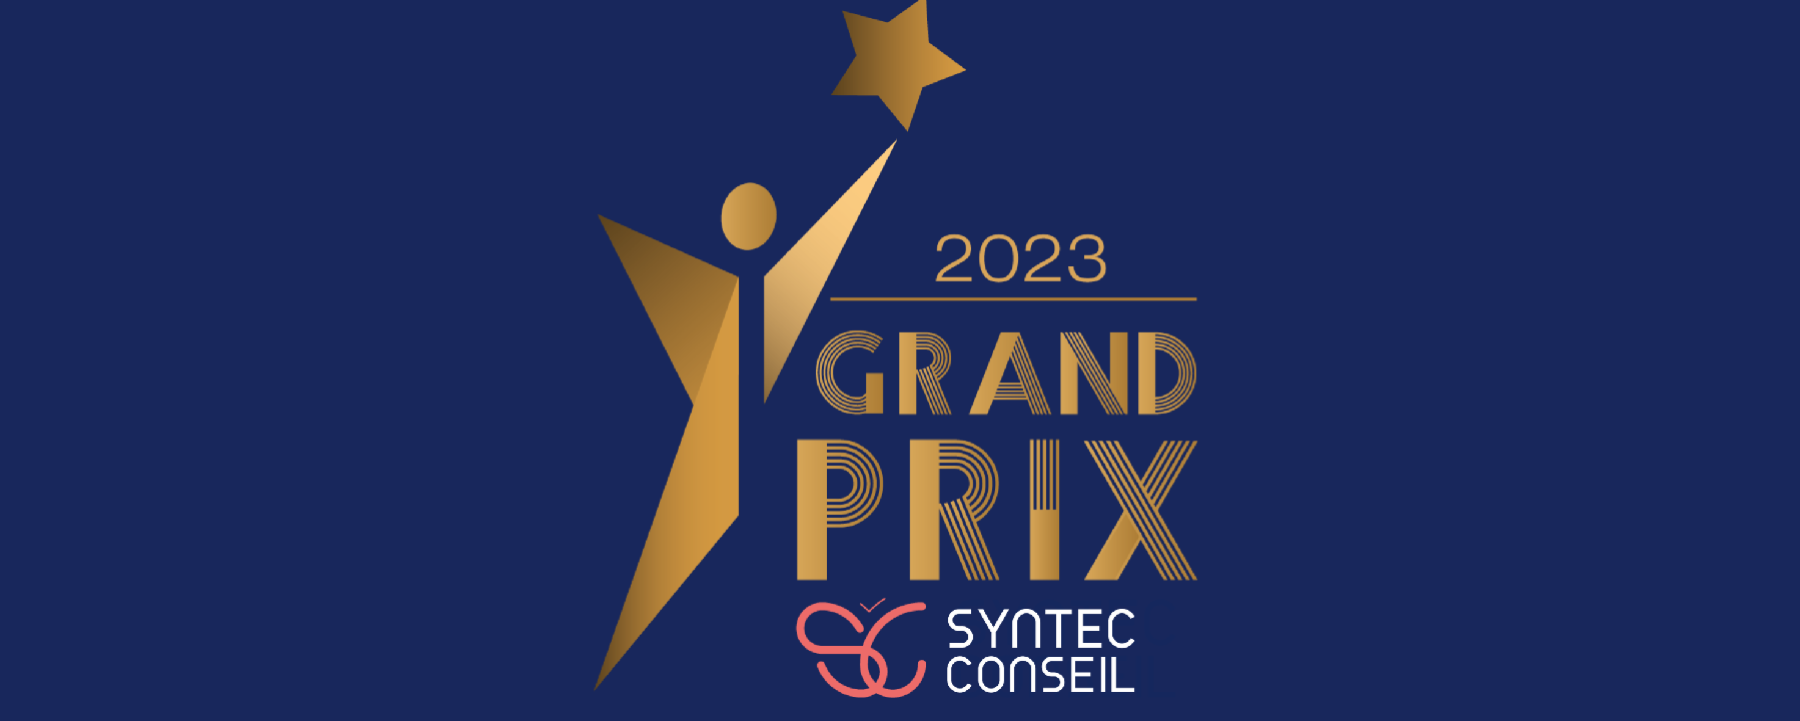 Grand Prix Syntec Conseil 2023